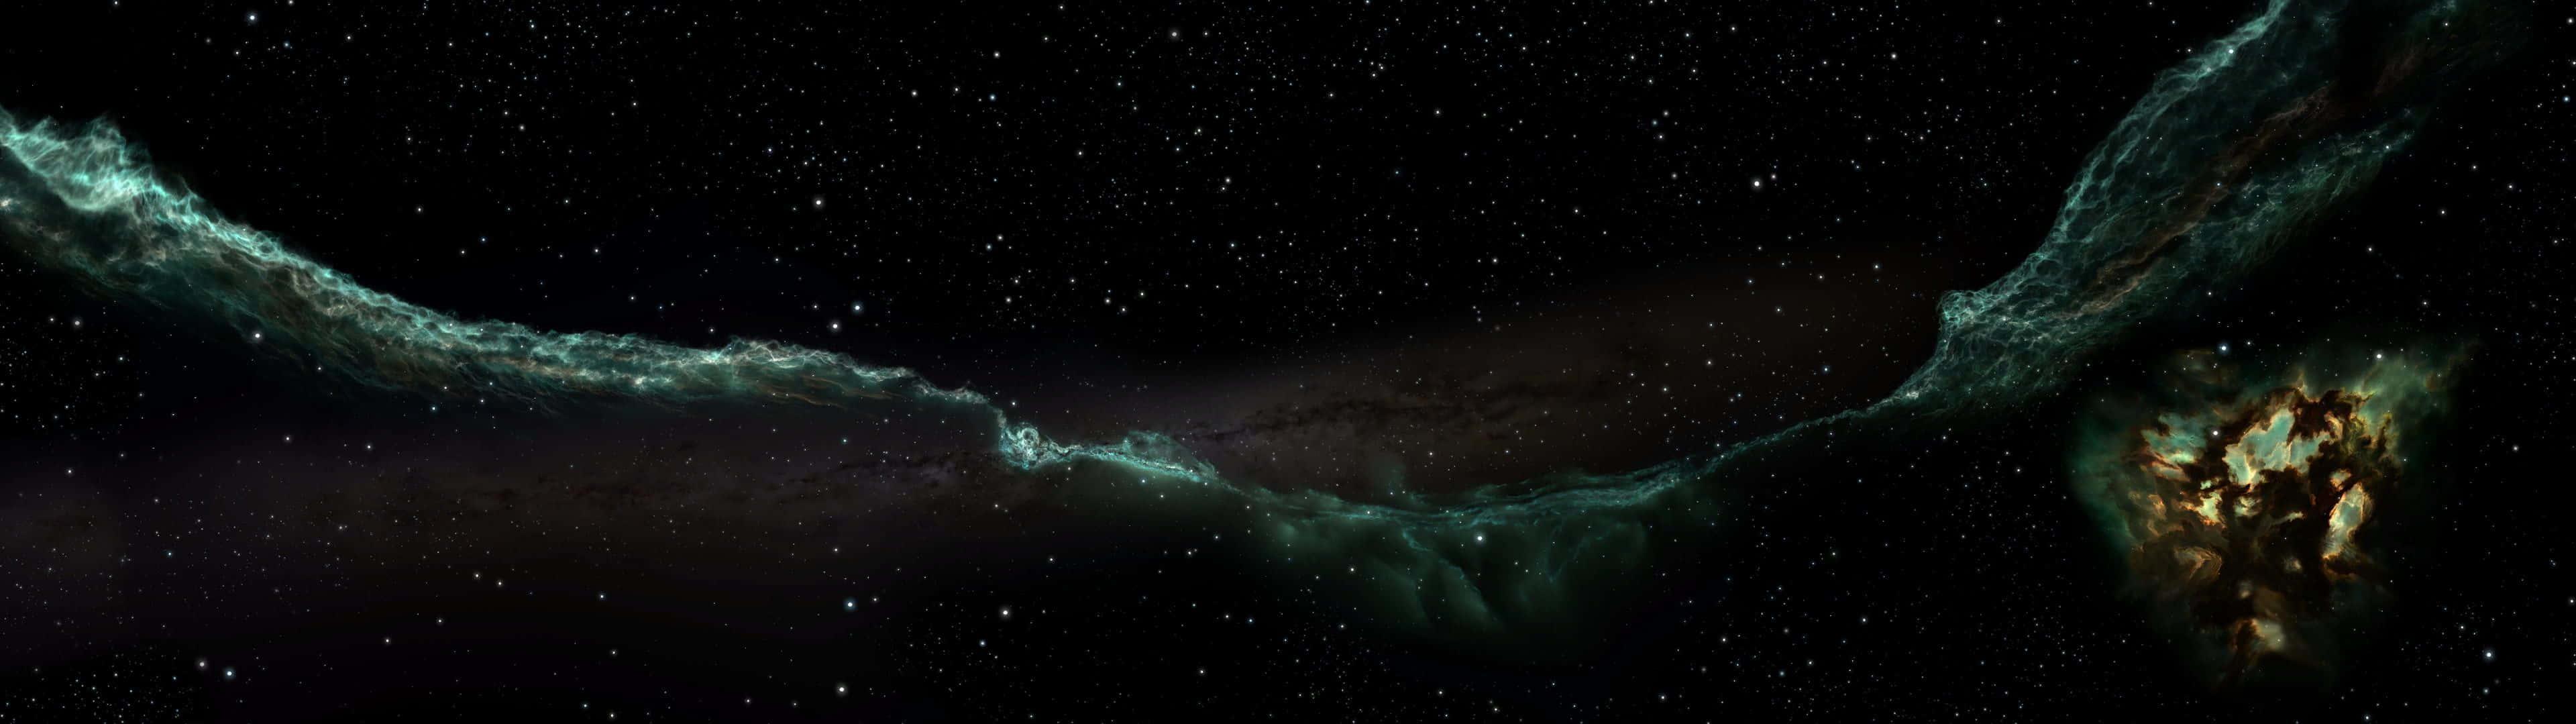 An Incredible Of A Galactic Nebula Wallpaper